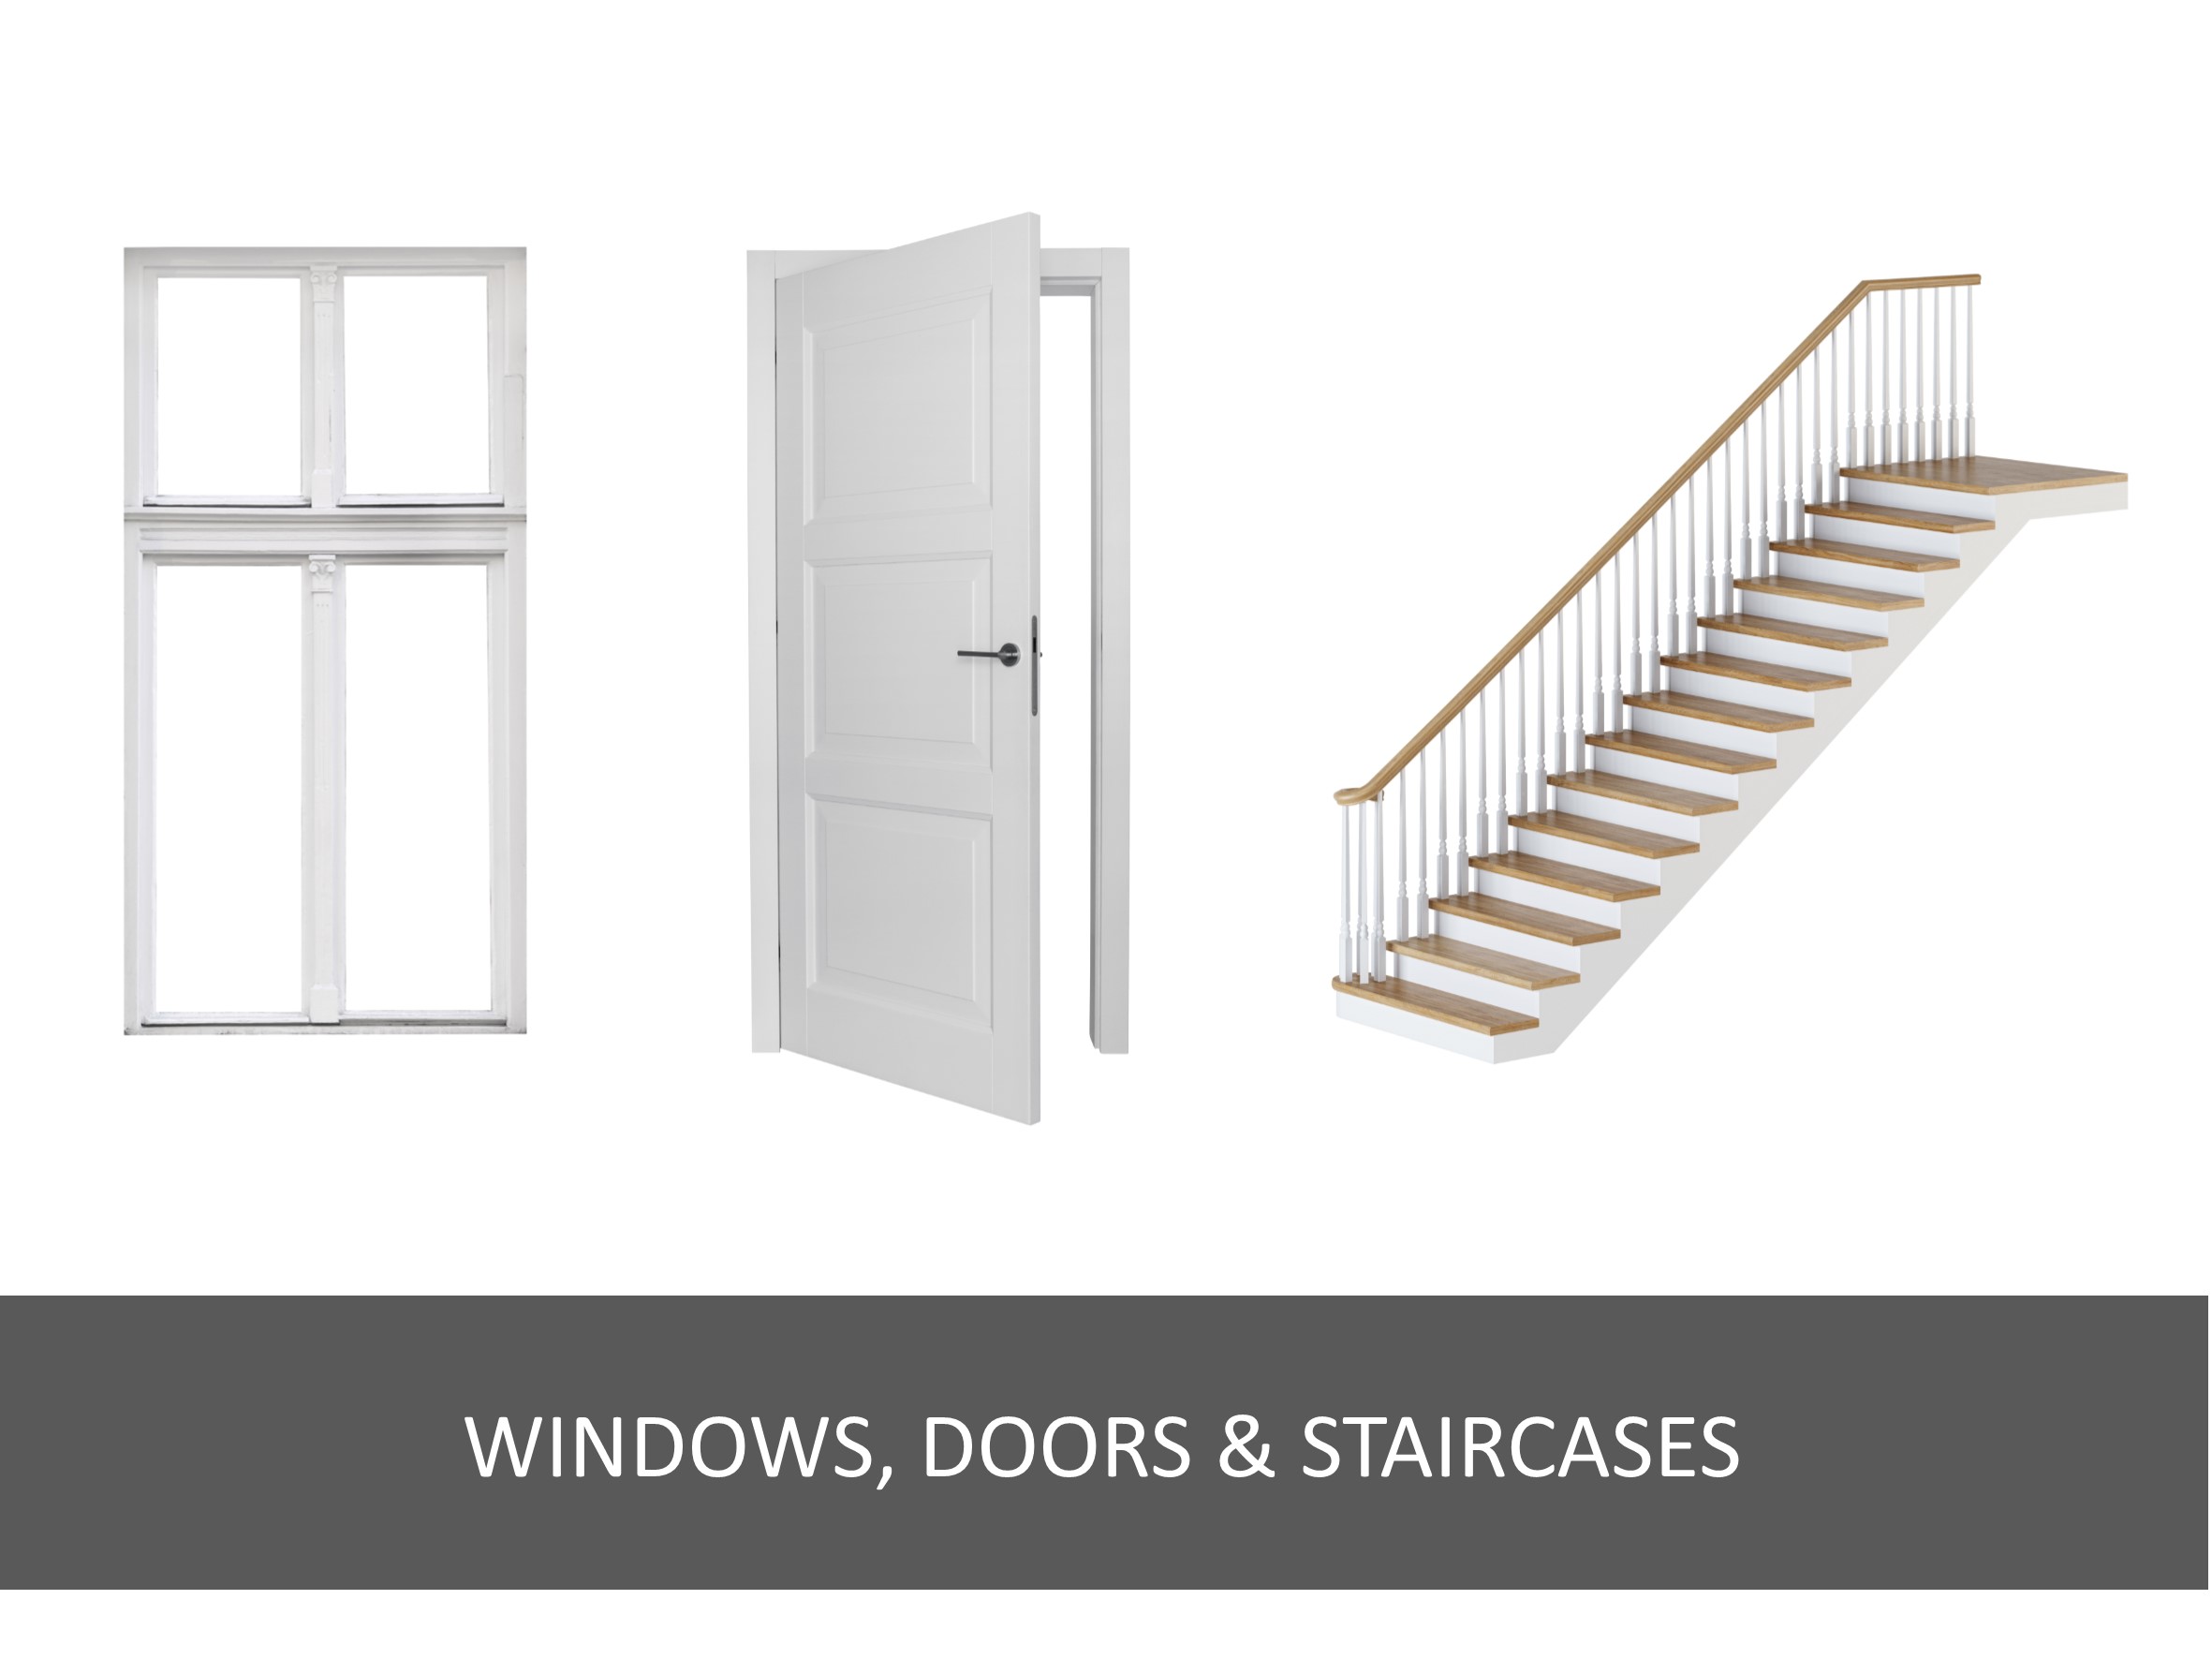 Windows, doors & staircases